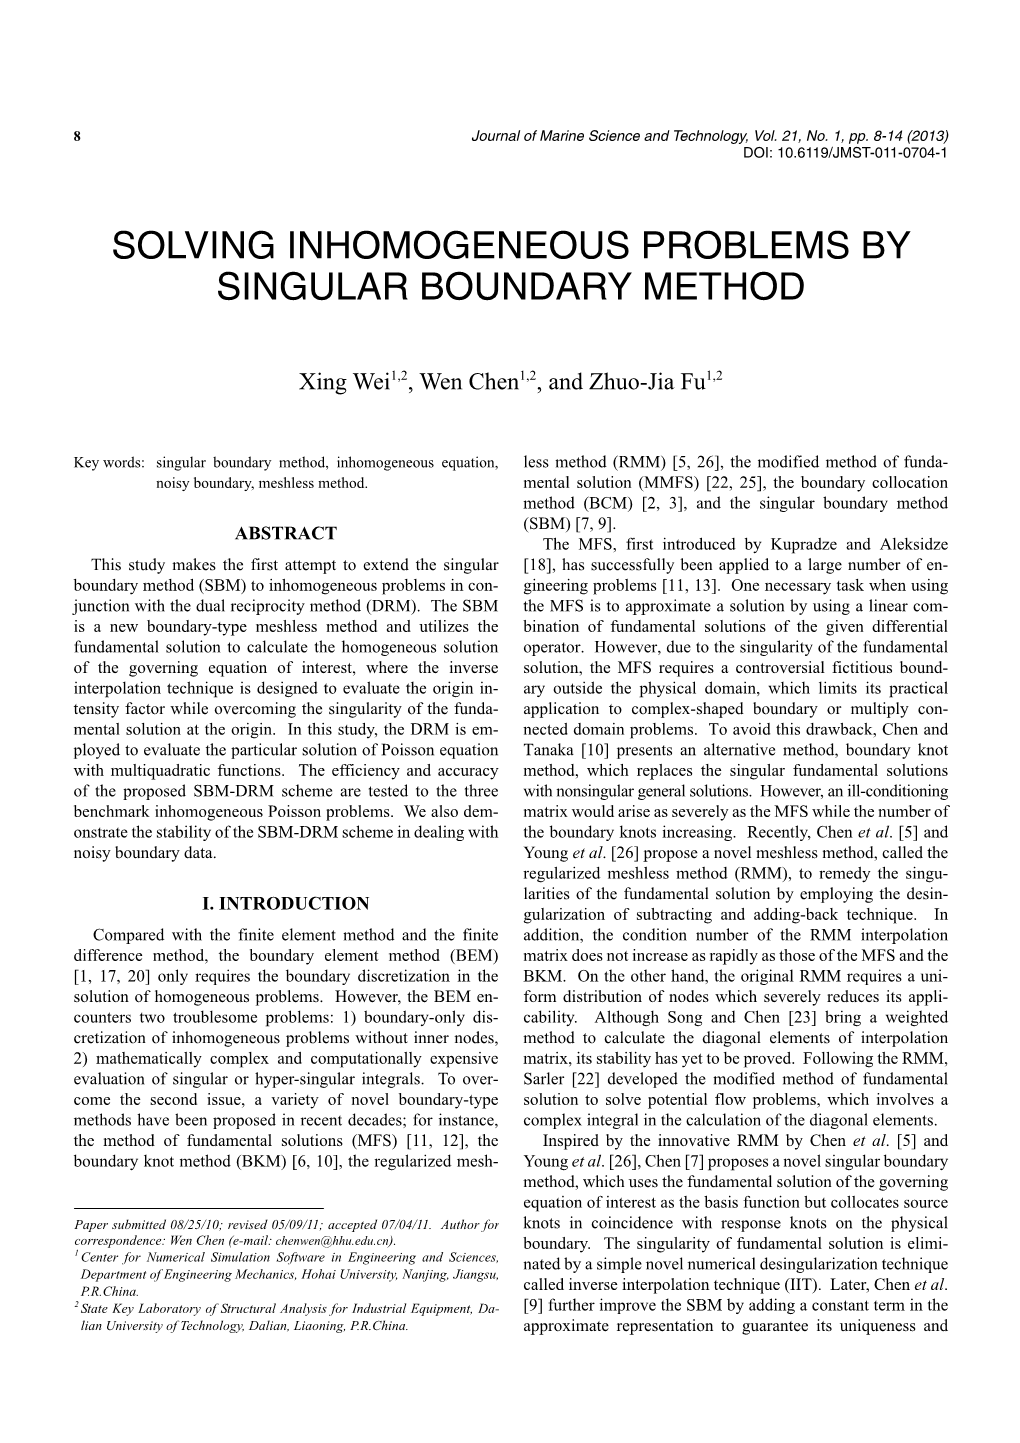 Solving Inhomogeneous Problems by Singular Boundary Method